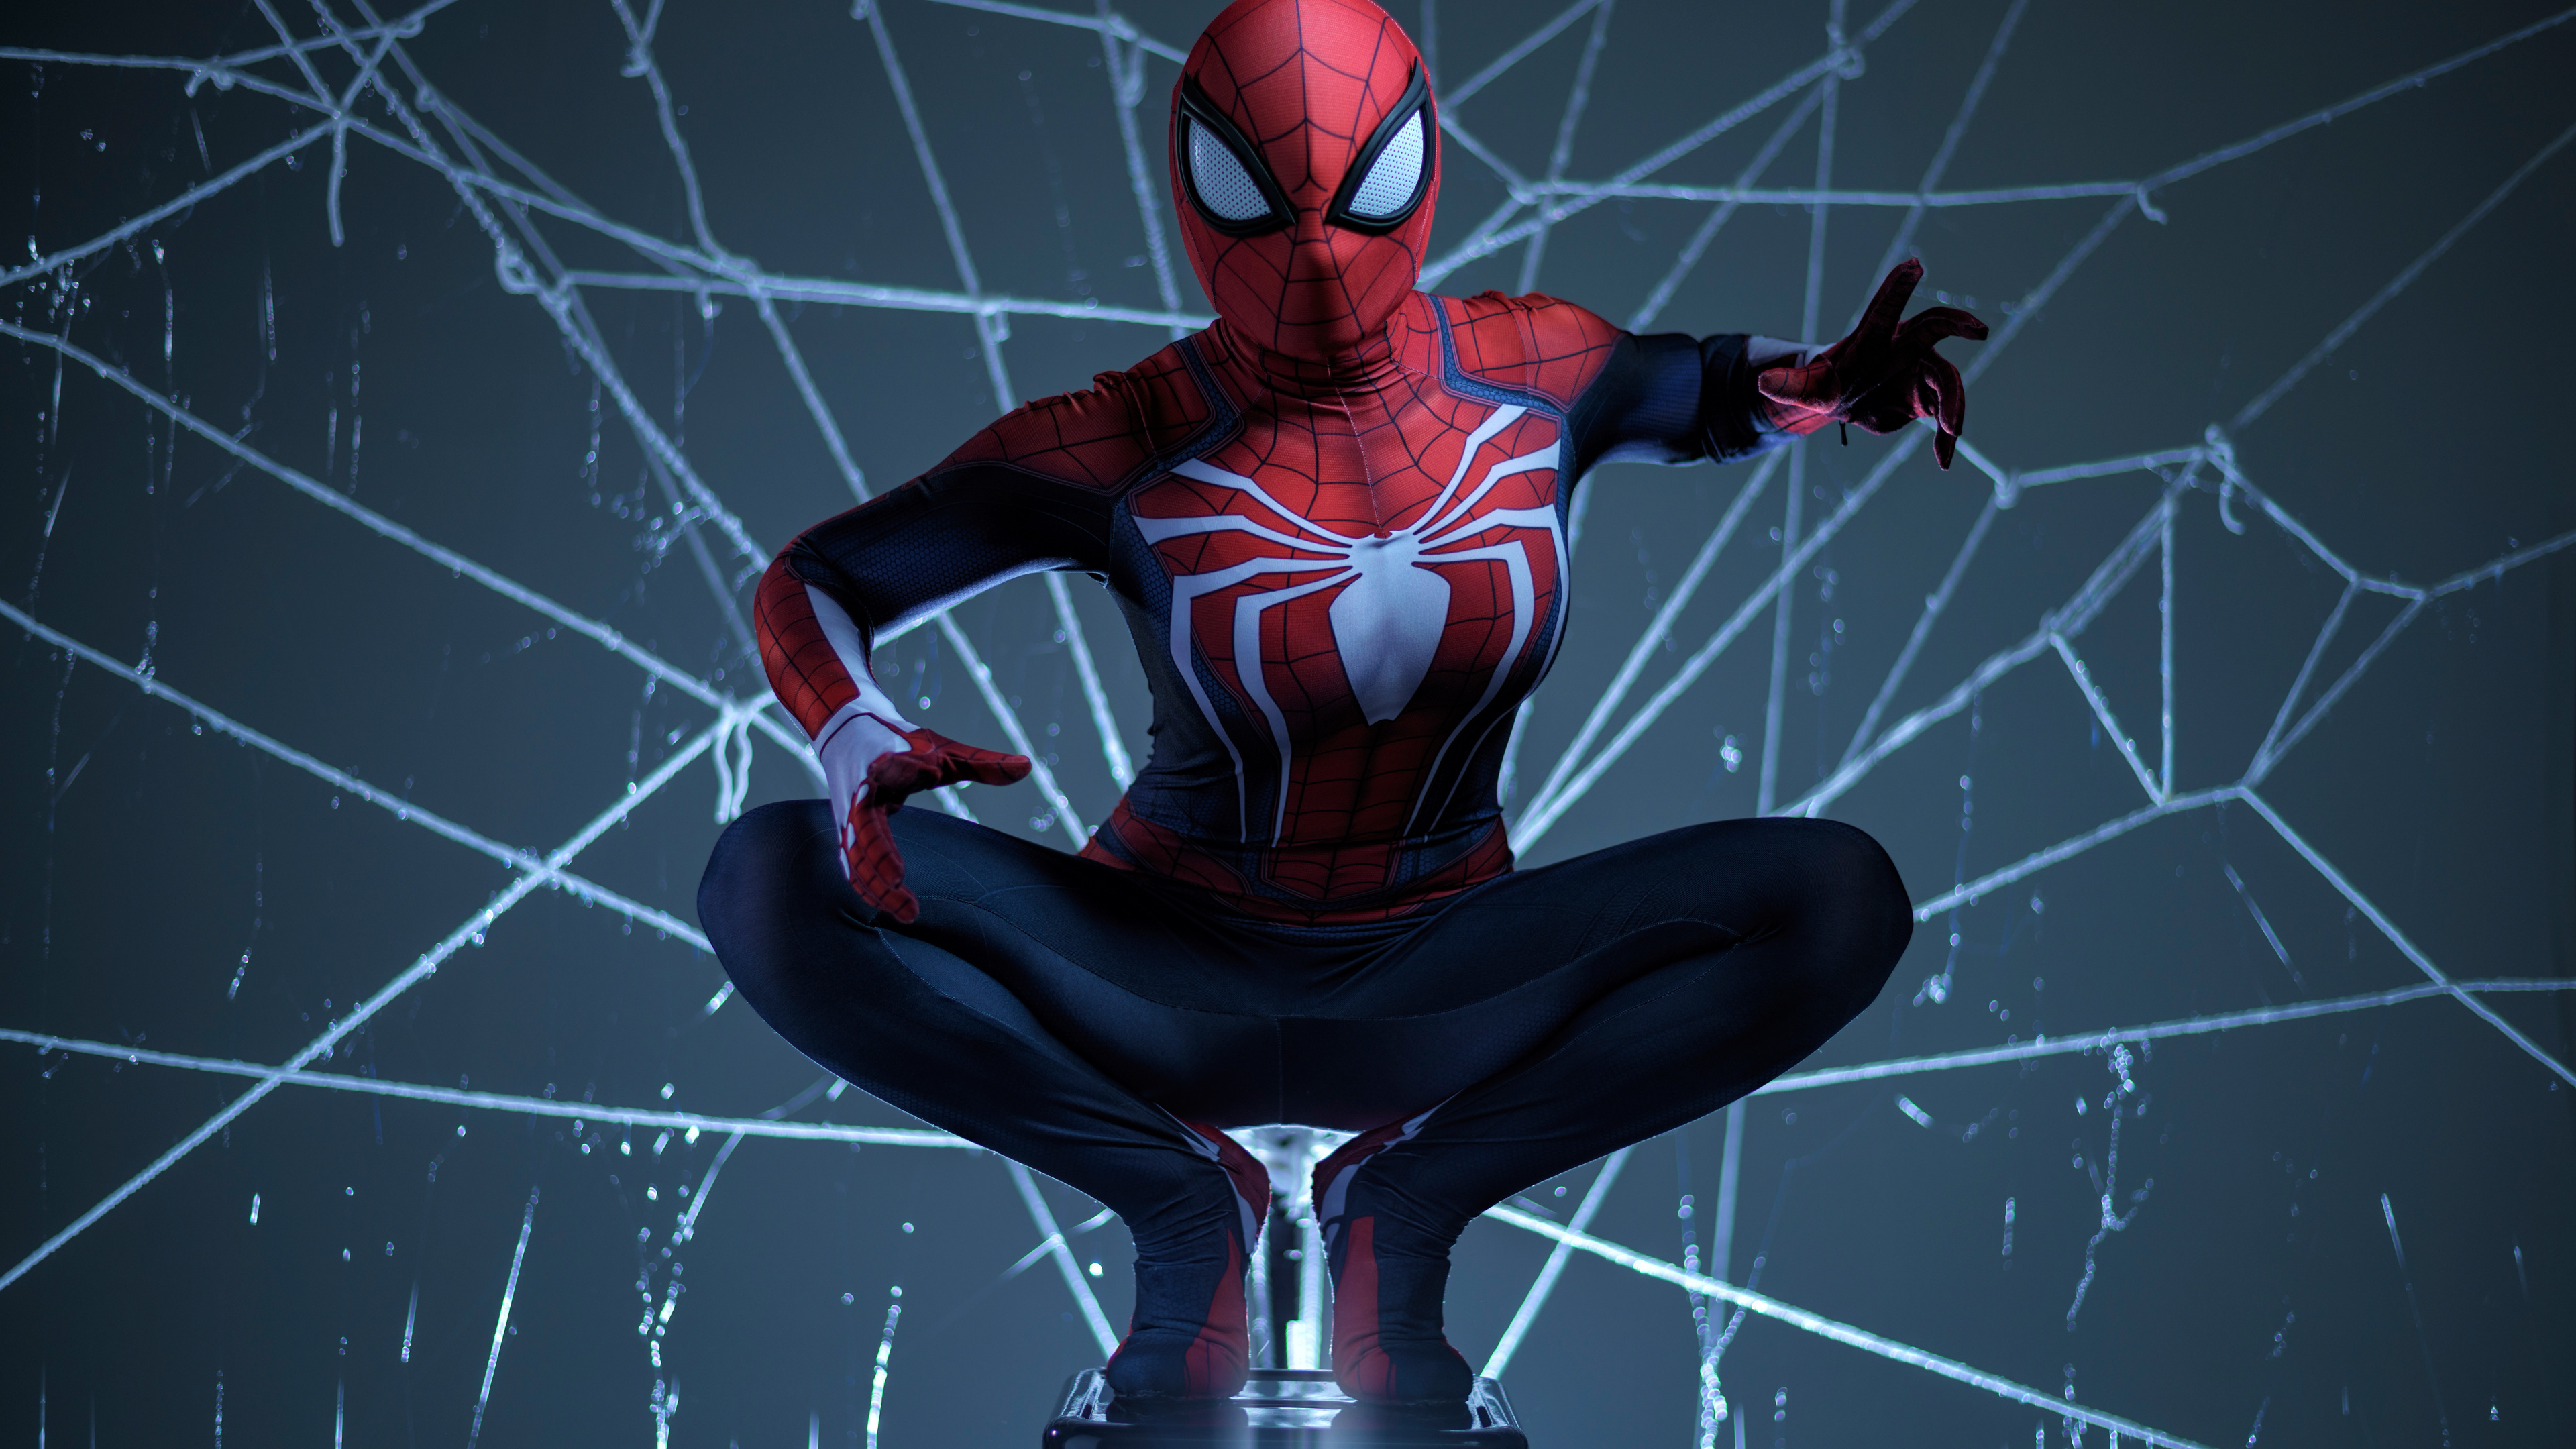 8k wallpaper,spider man,fictional character,superhero,supervillain,illustration